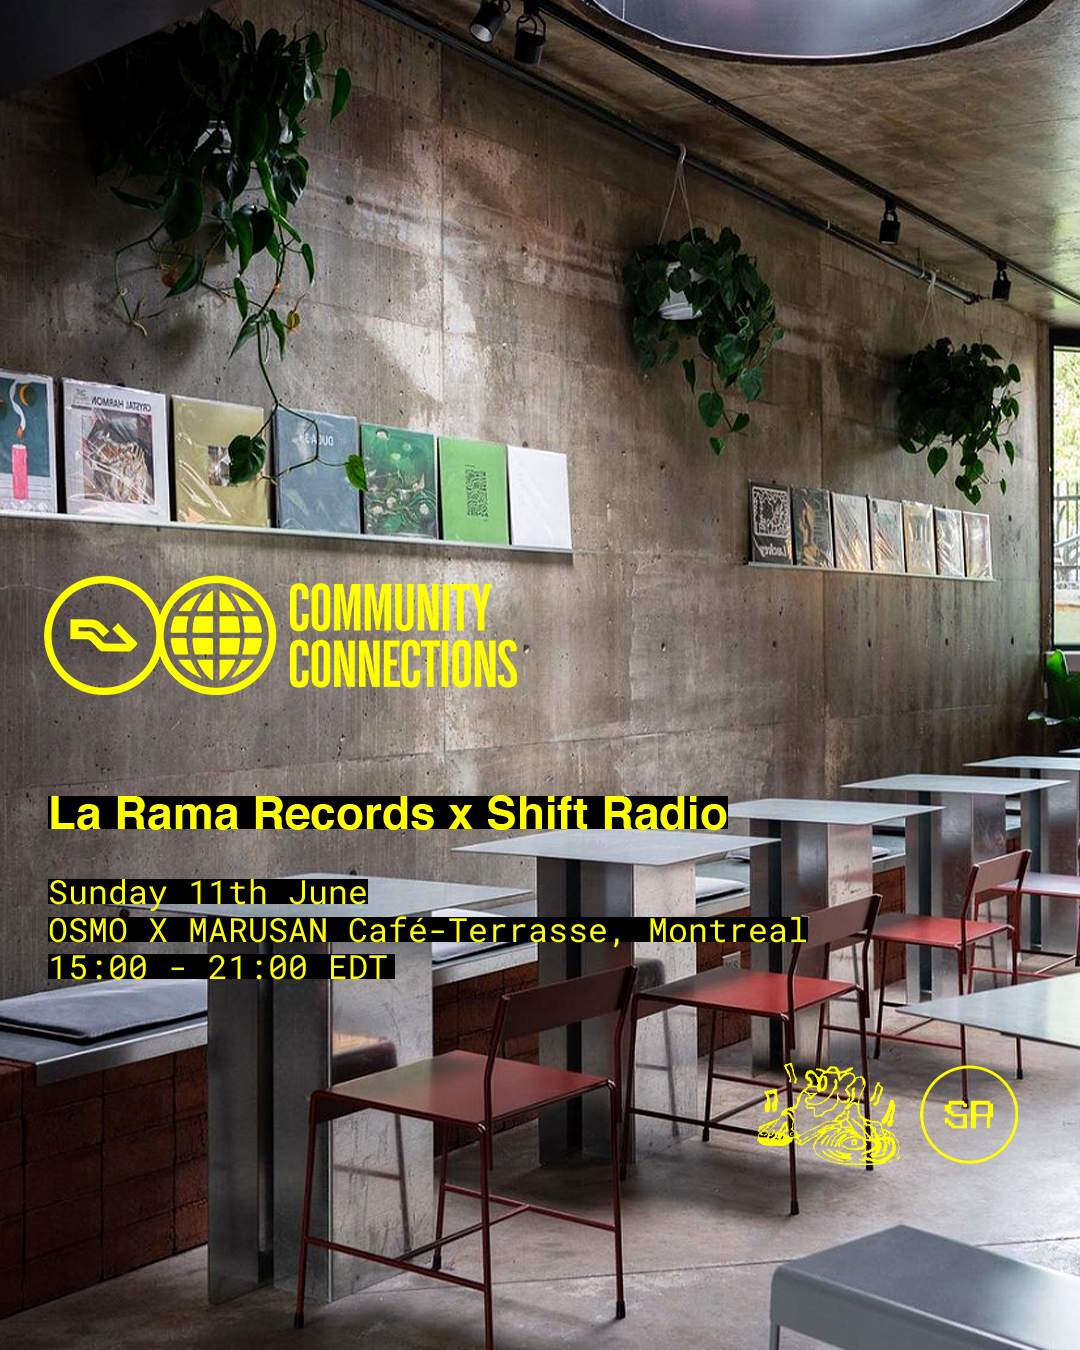 RA CC Montreal x Shift Radio x La Rama Records - Página trasera